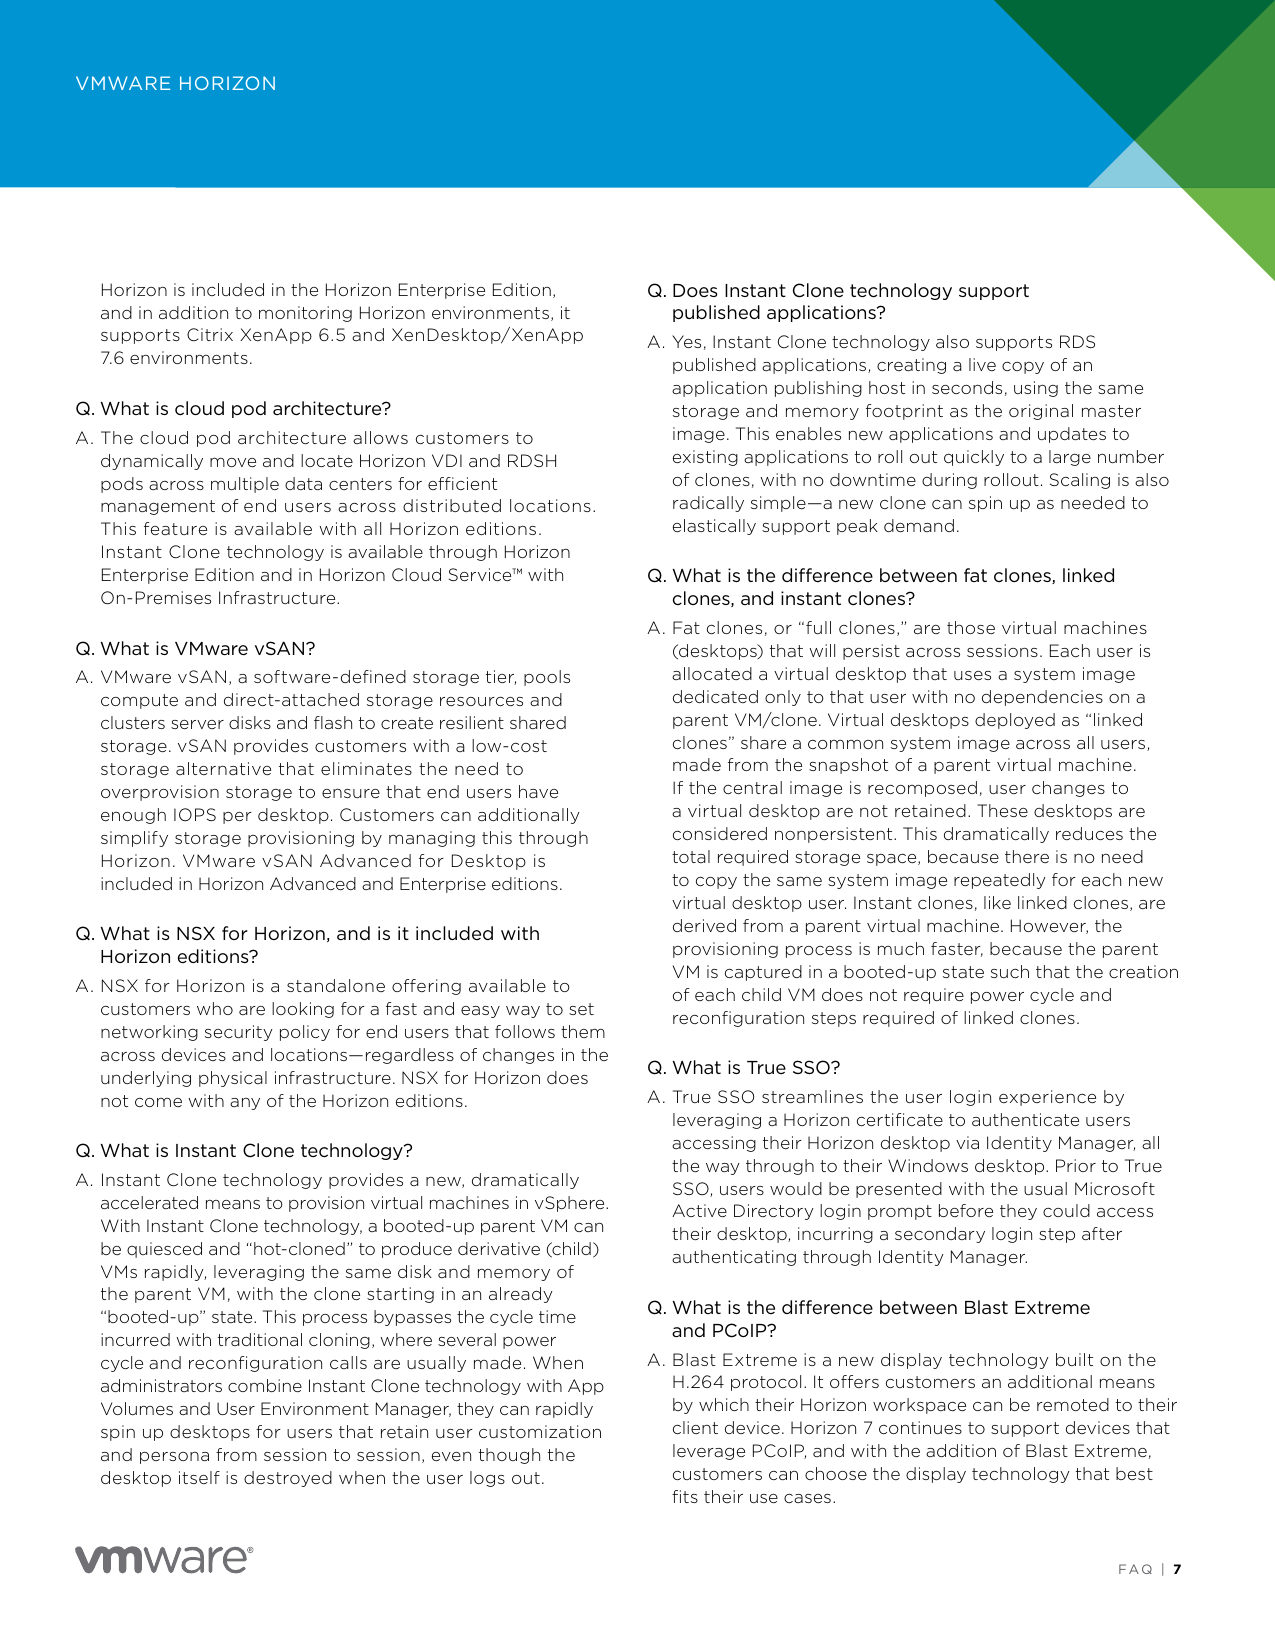 Page 7 of 12 - VMware Horizon 7 FAQ Vmware-horizon-7-faq